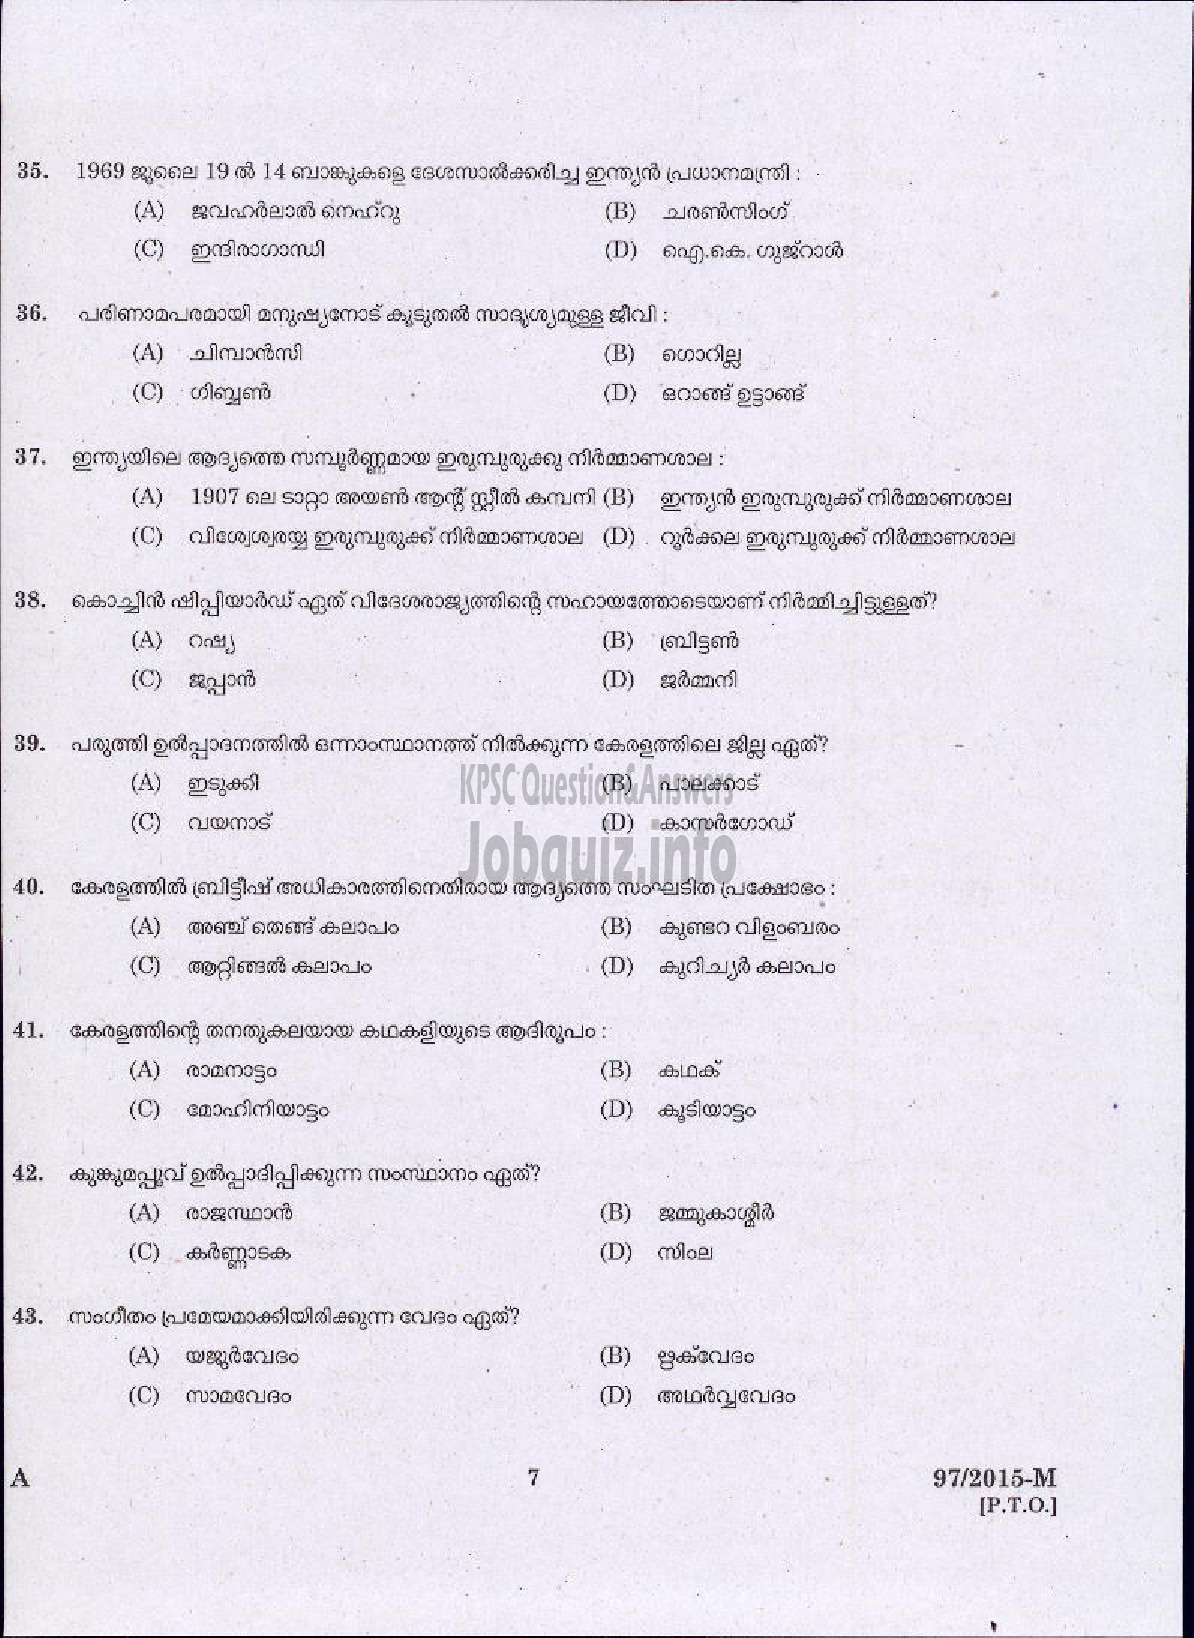 Kerala PSC Question Paper - DRIVER GR II HDV VARIOUS RESERVE DRIVER KSRTC LORRY JEEP TRACTOR KERALA CERAMICS LTD PLANTATION CORP OF KERALA LTD DRIVER HDV EXCISE-5